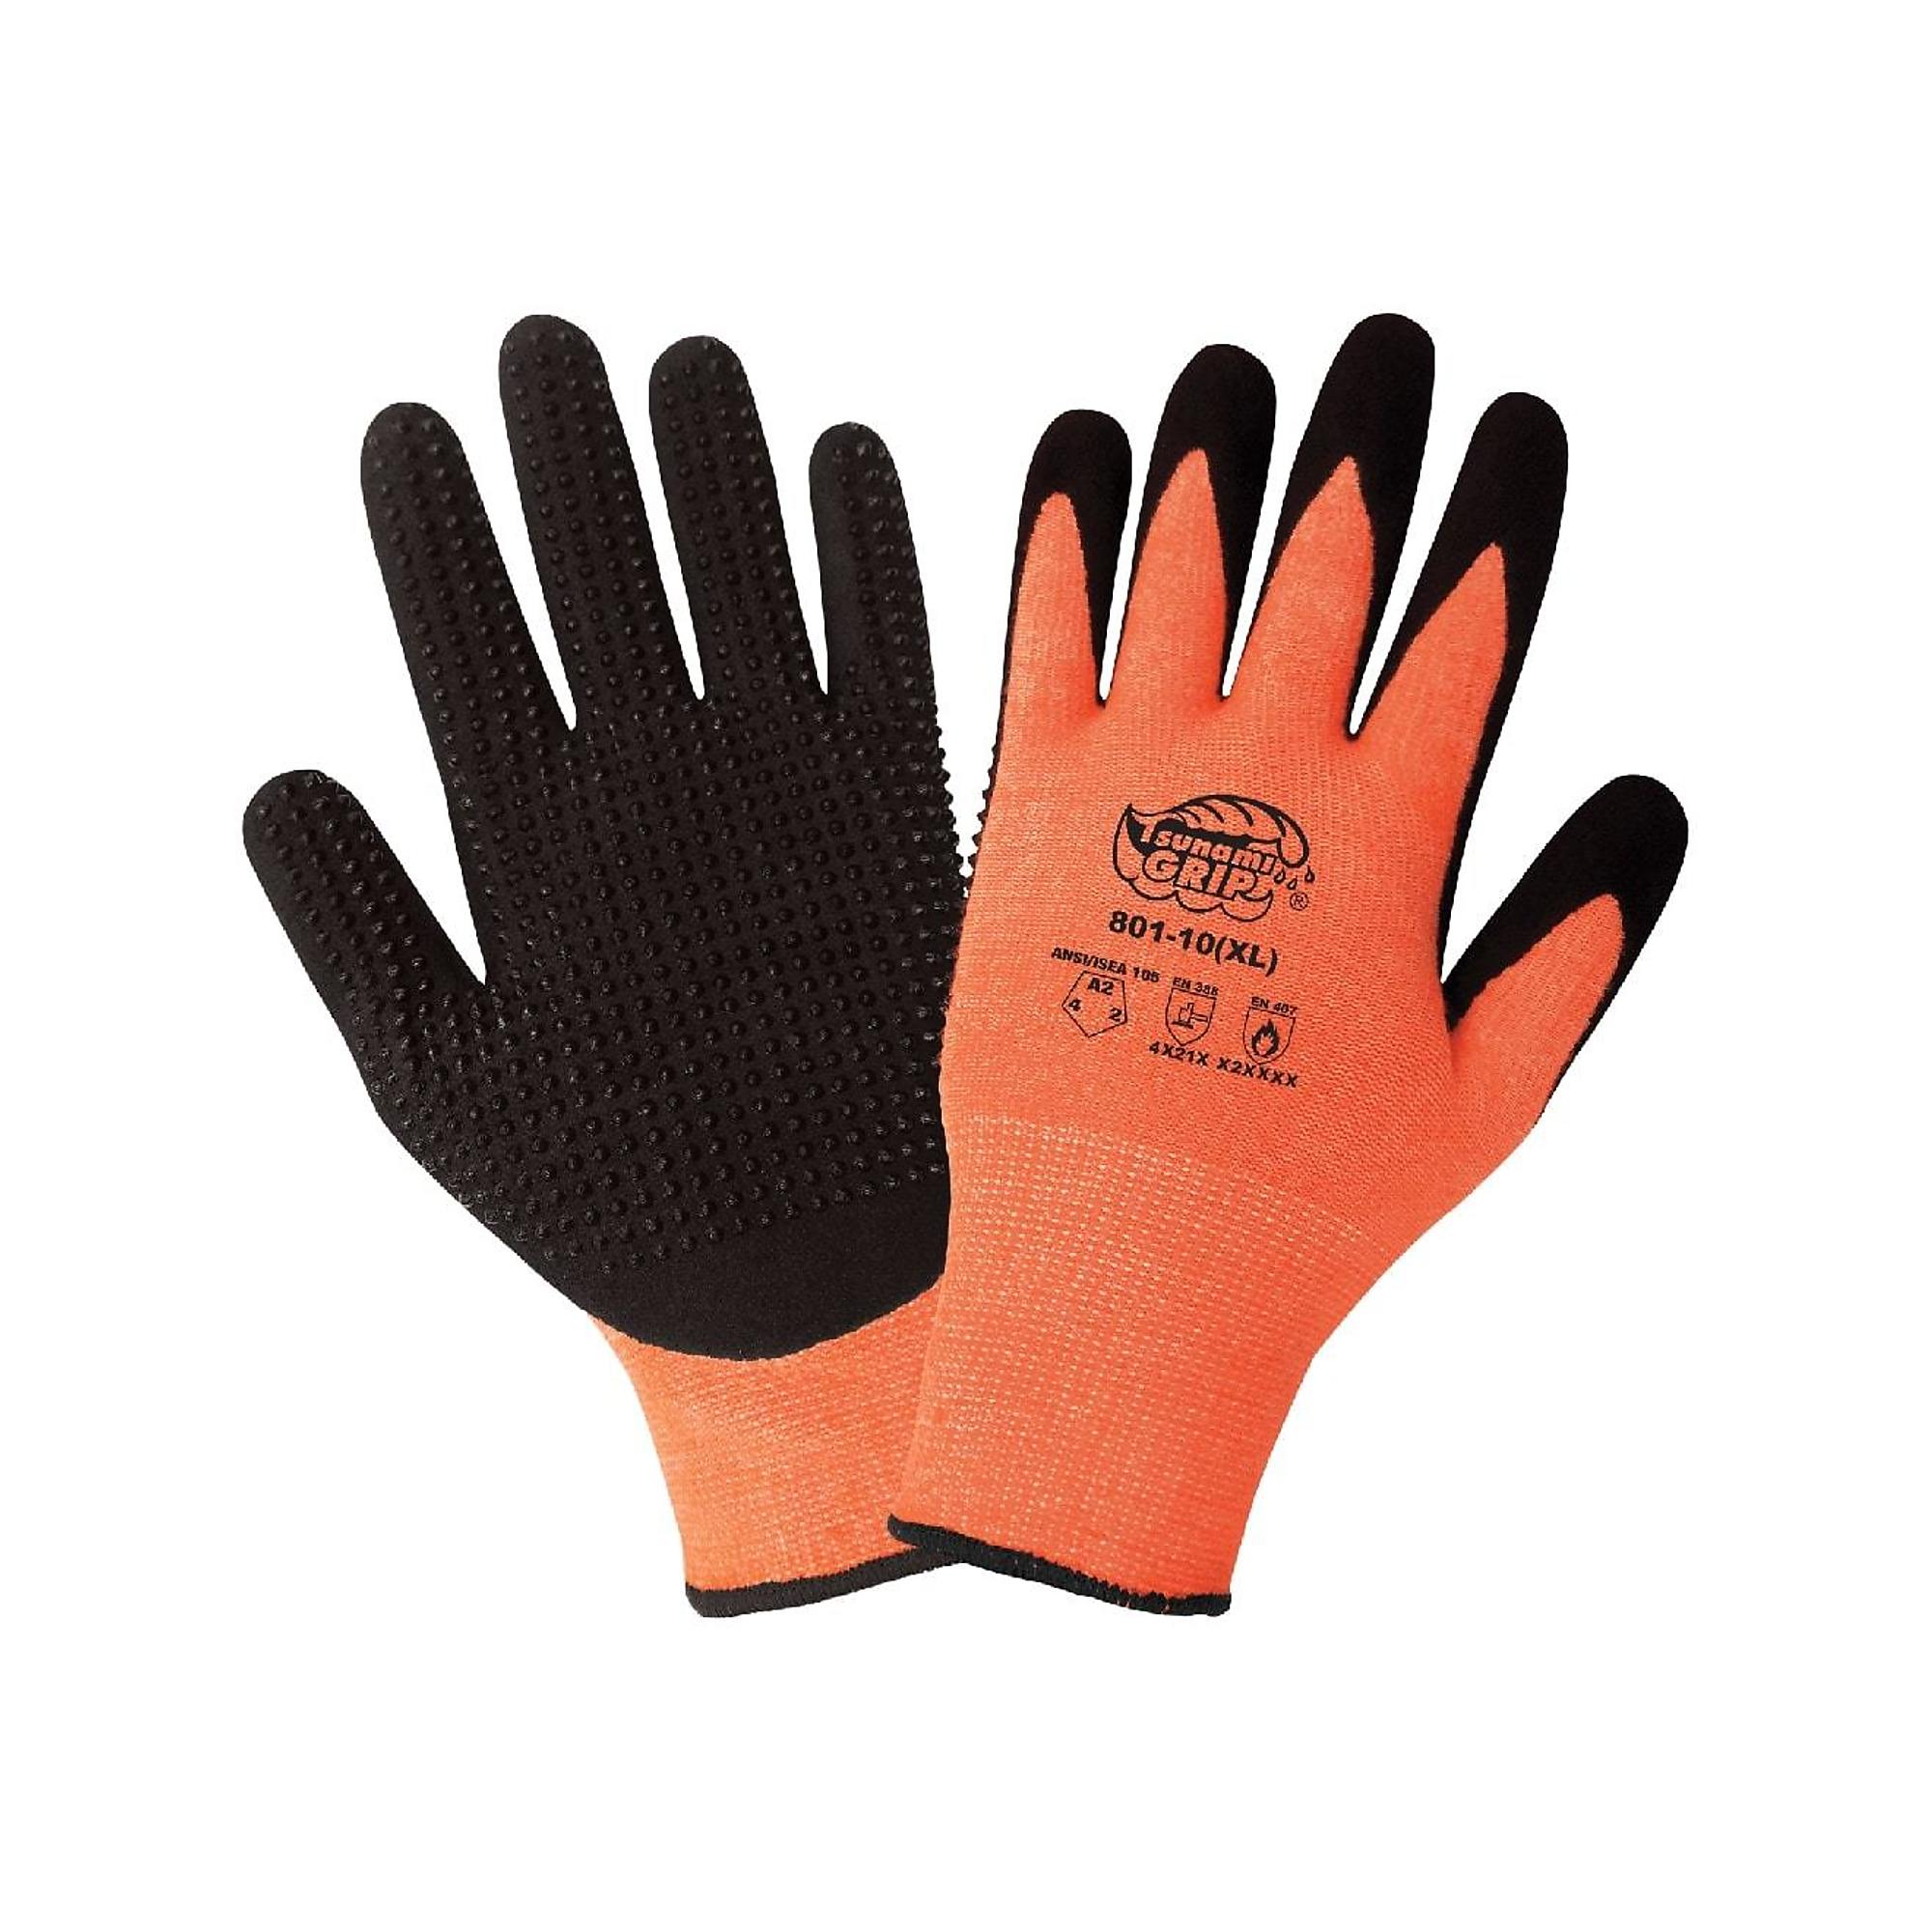 Global Glove Tsunami Grip , Orange, Heat Resist, Dotted, Cut Resist A2 Gloves - 12 Pairs, Size M, Color Orange/Black, Included (qty.) 12 Model 801-8(M